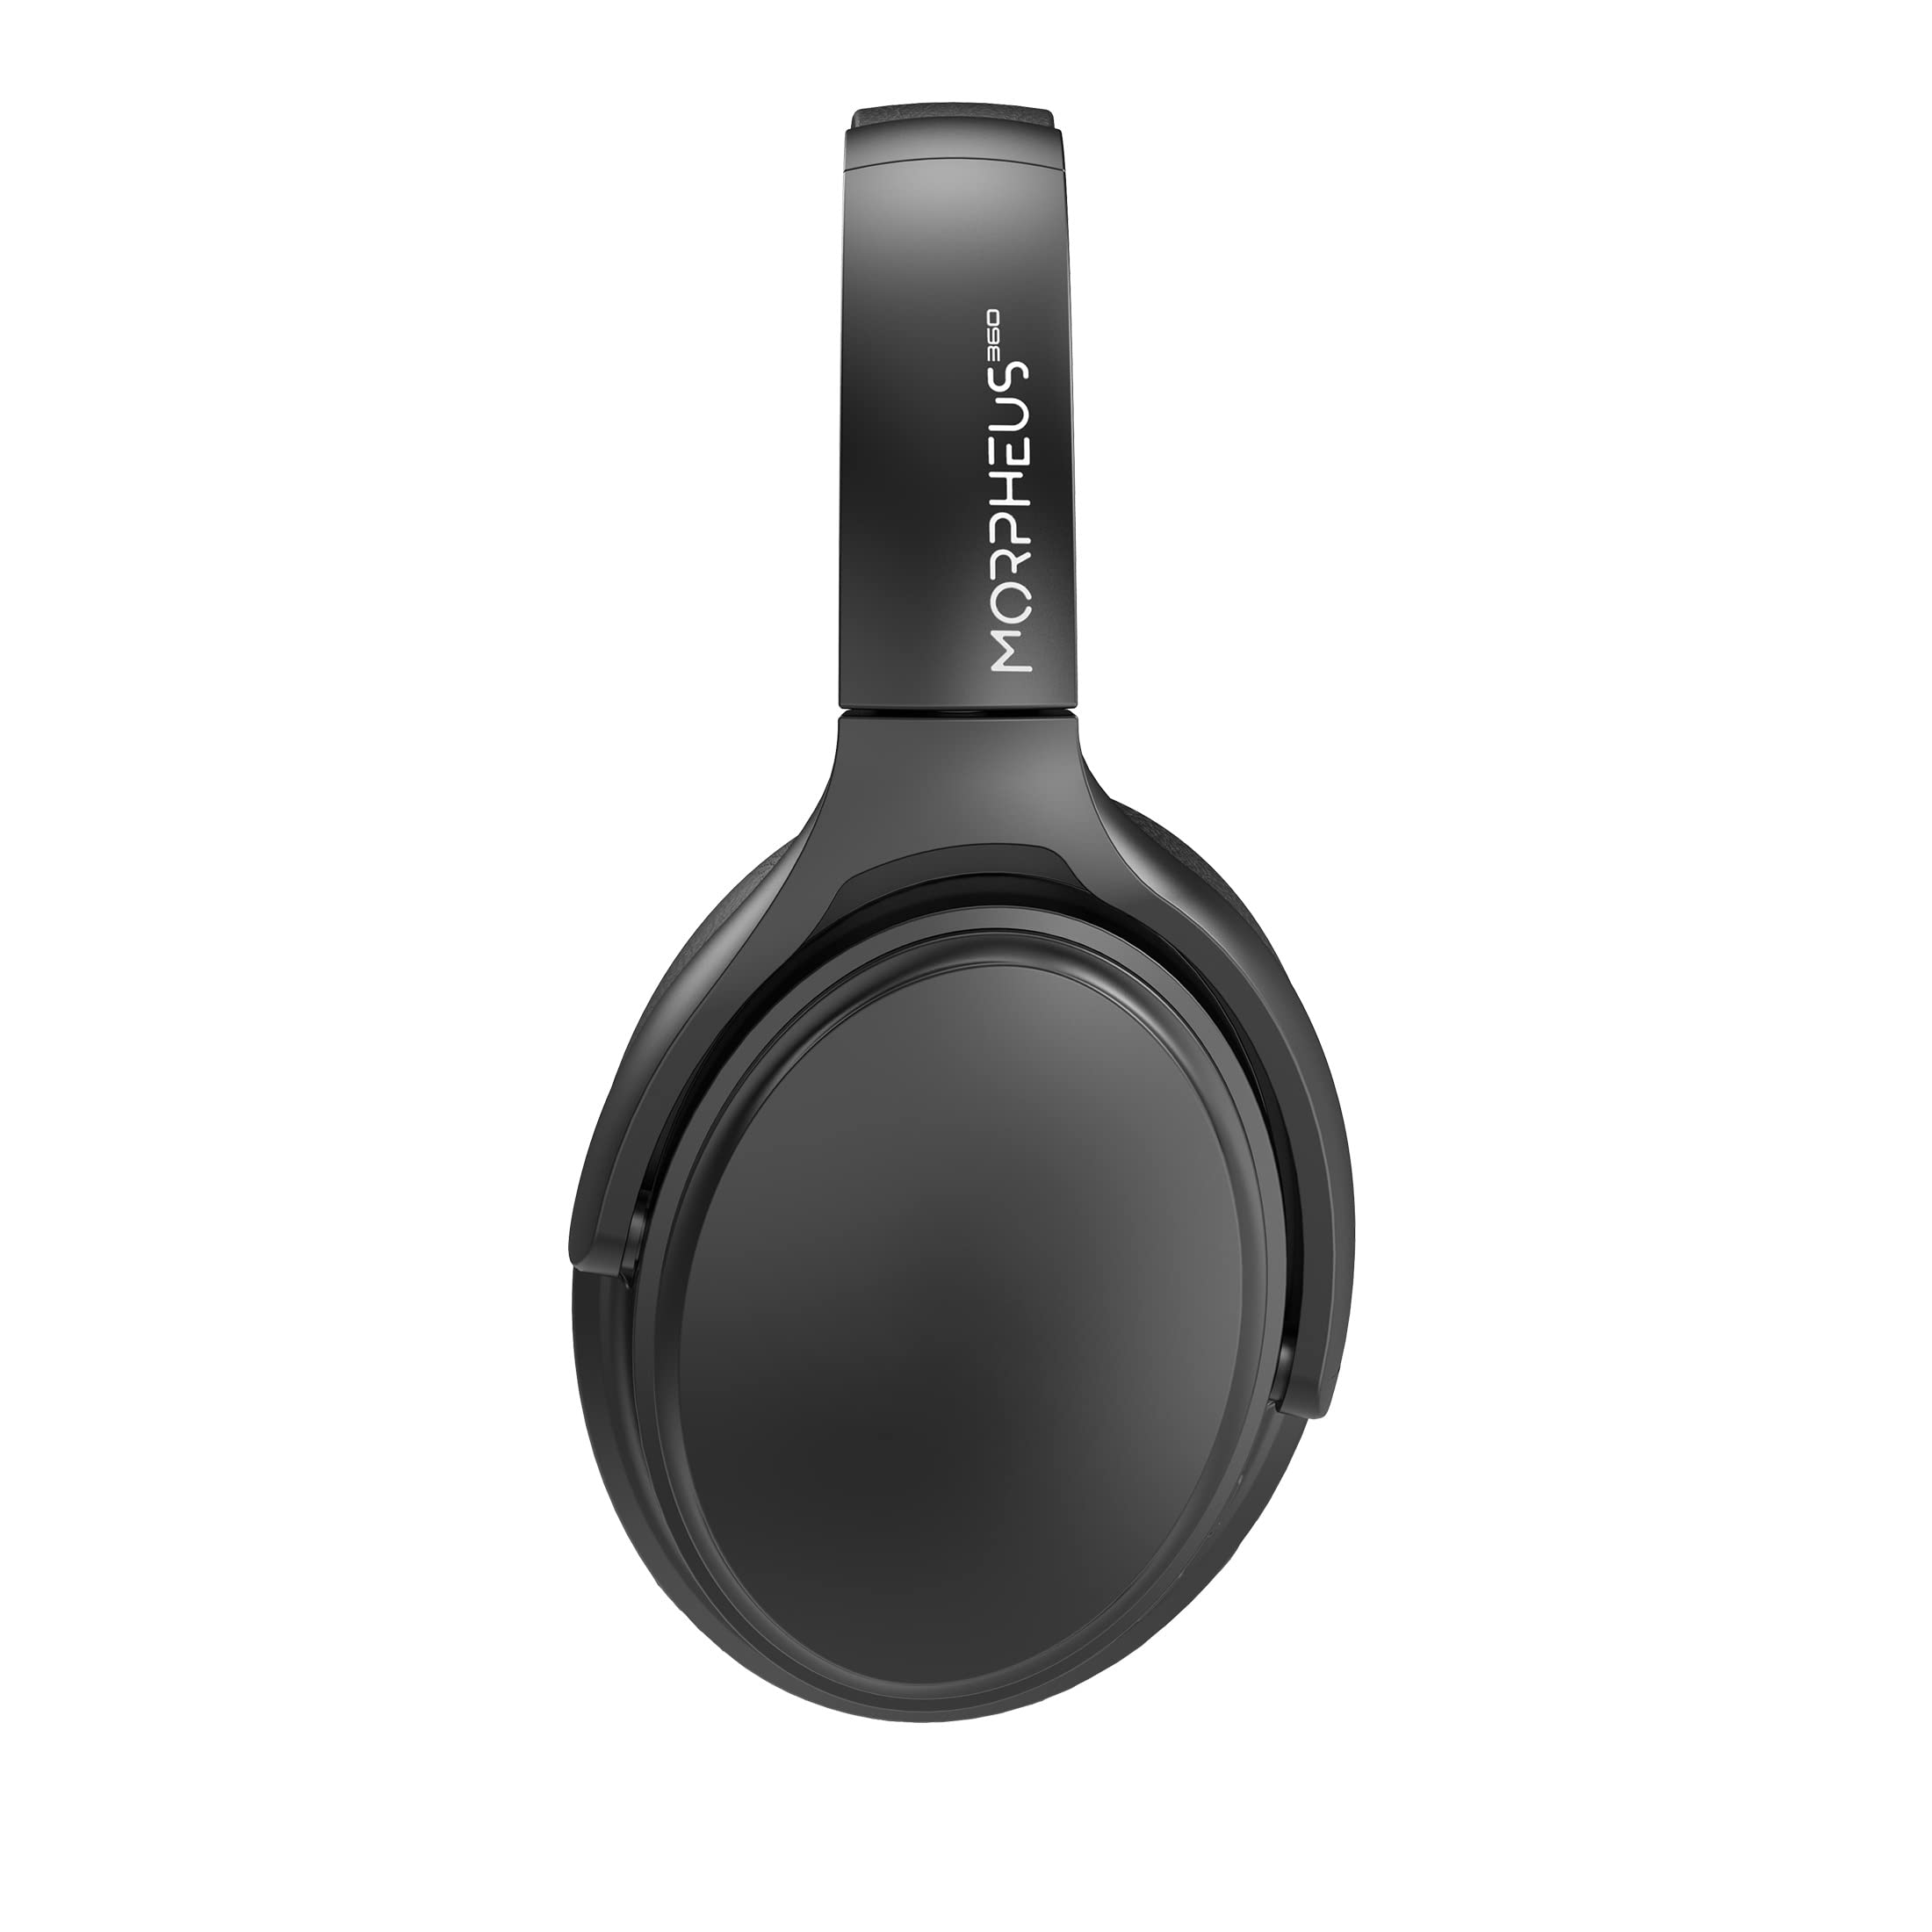 Morpheus 360 Krave ANC Wireless Noise Cancelling Headphones - Bluetooth 5.0 Headset w/Microphone - HP9350B.